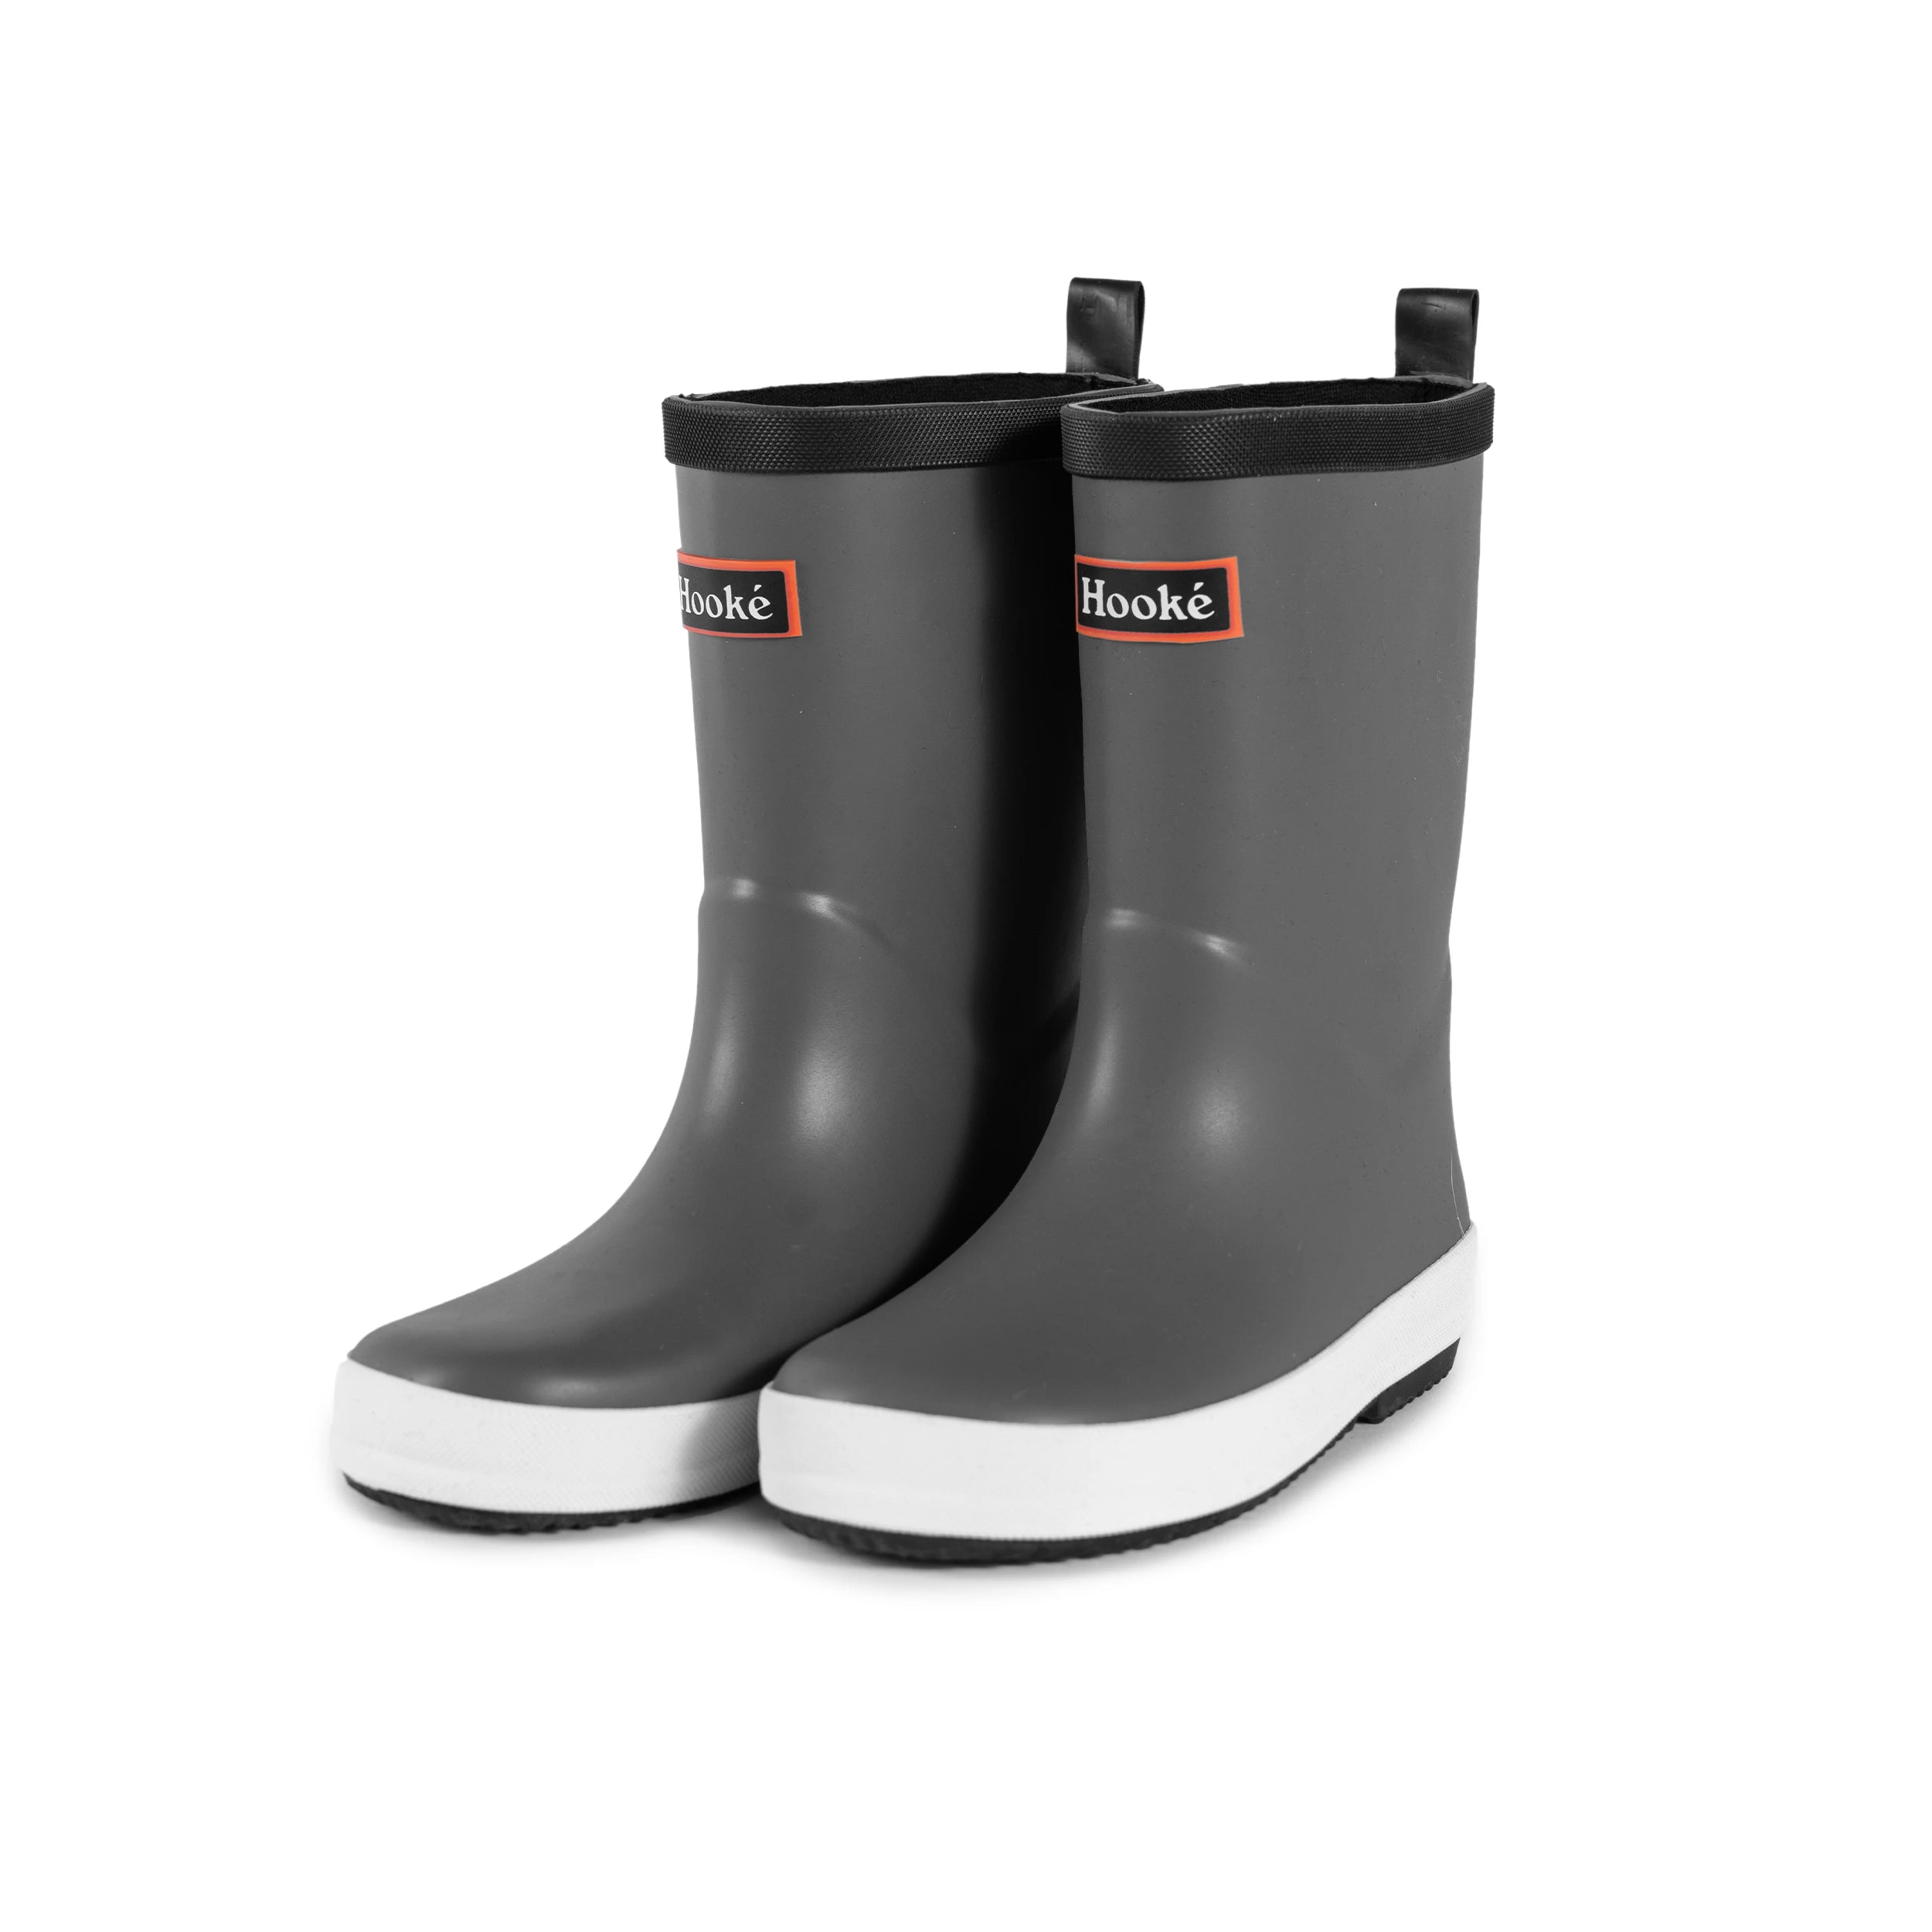 K's Rain Boots 2.0